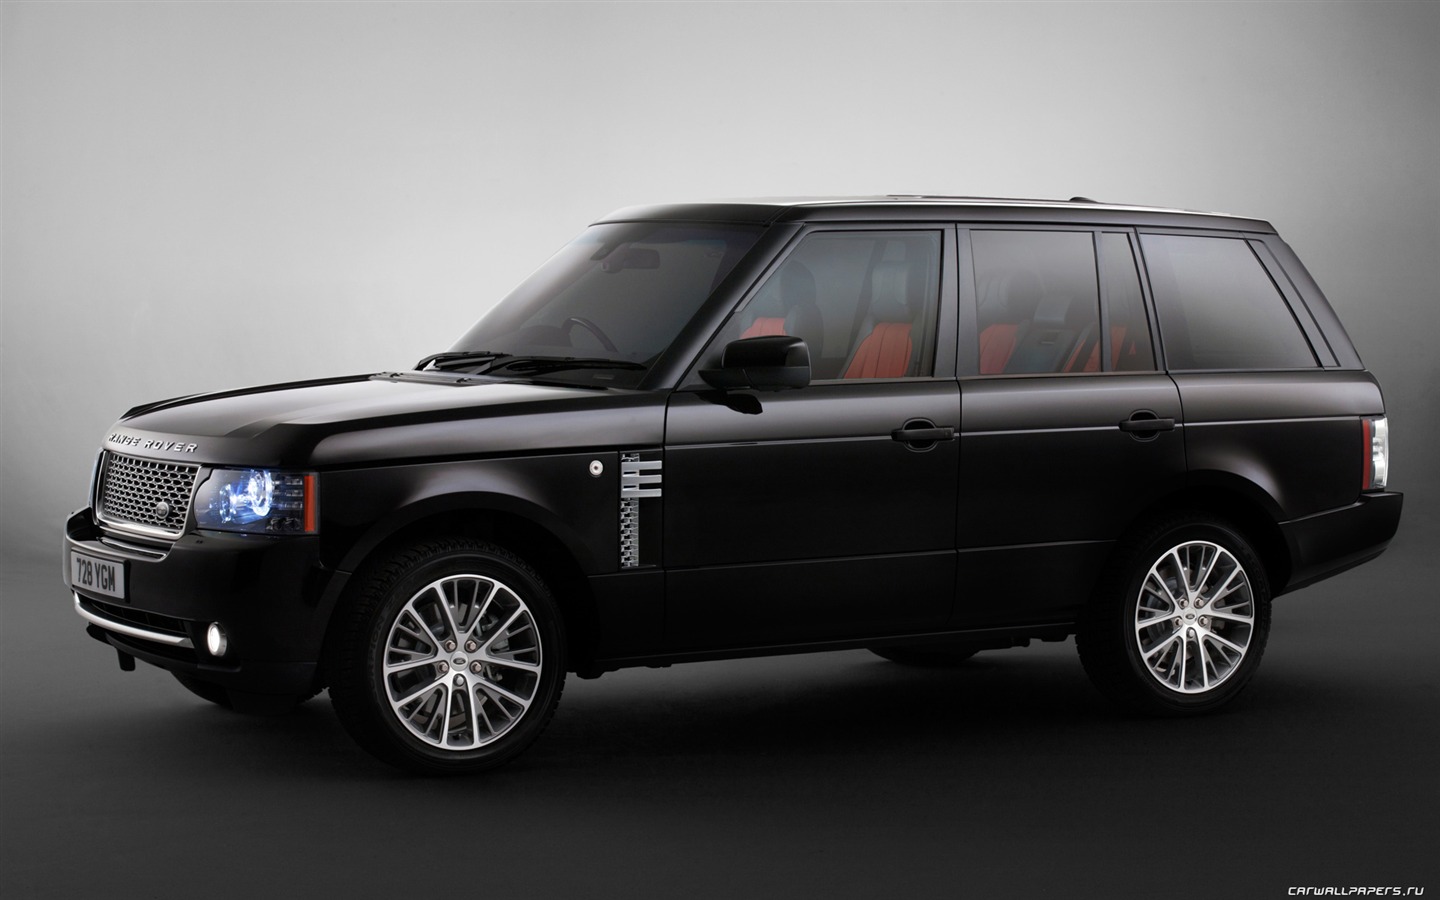 Land Rover Range Rover Black Edition - 2011 路虎17 - 1440x900